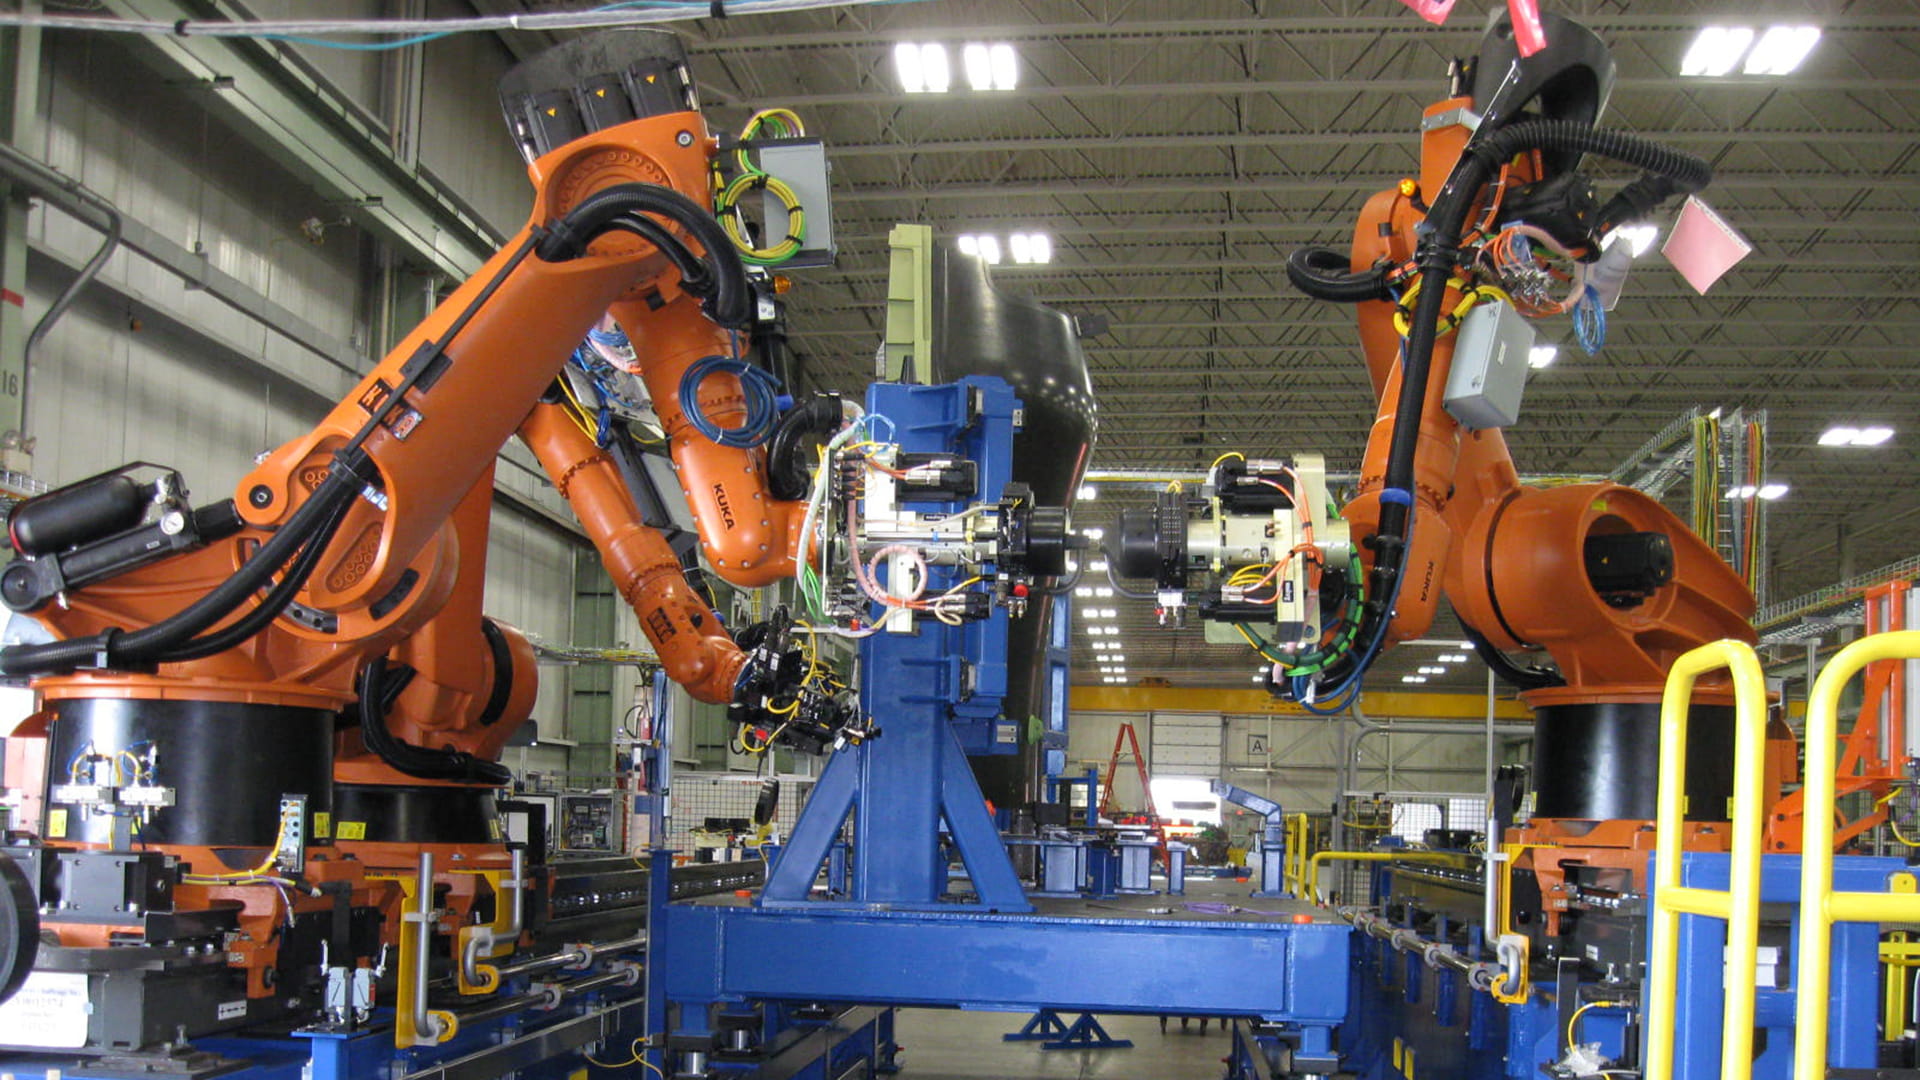 Manufacturing and robotics assembling